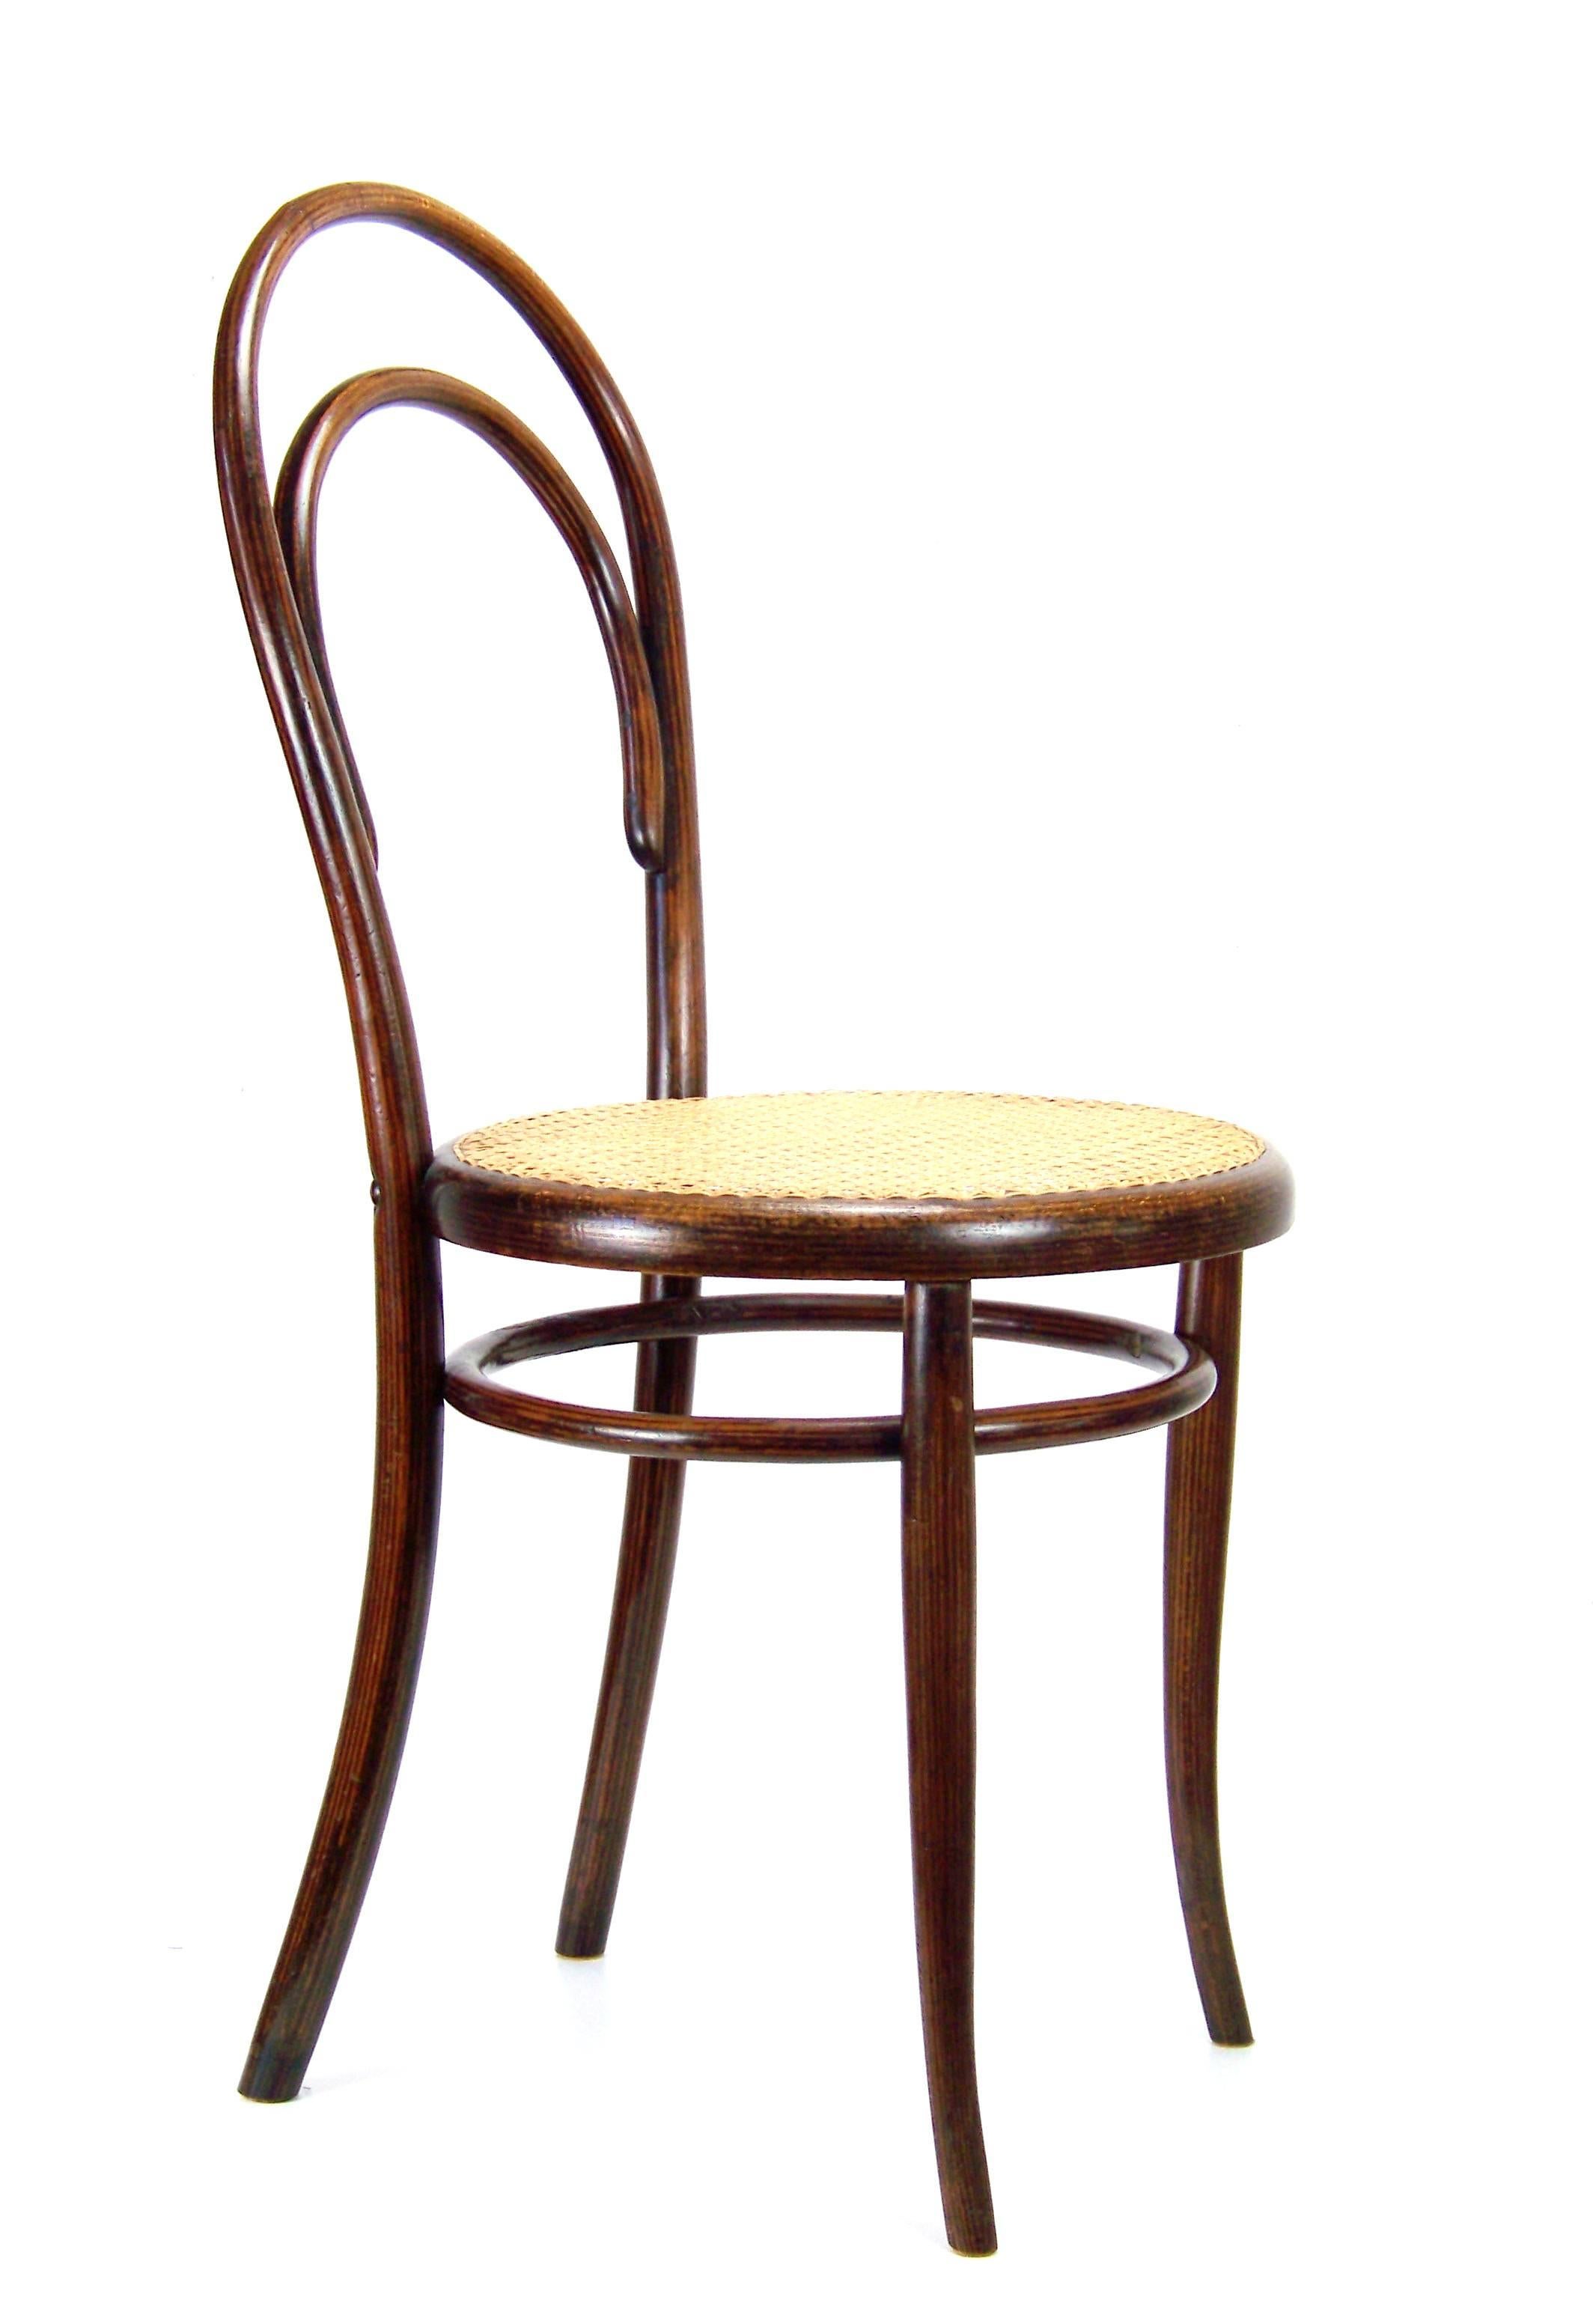 Ein seltenes frühes Modell des berühmten Stuhls 